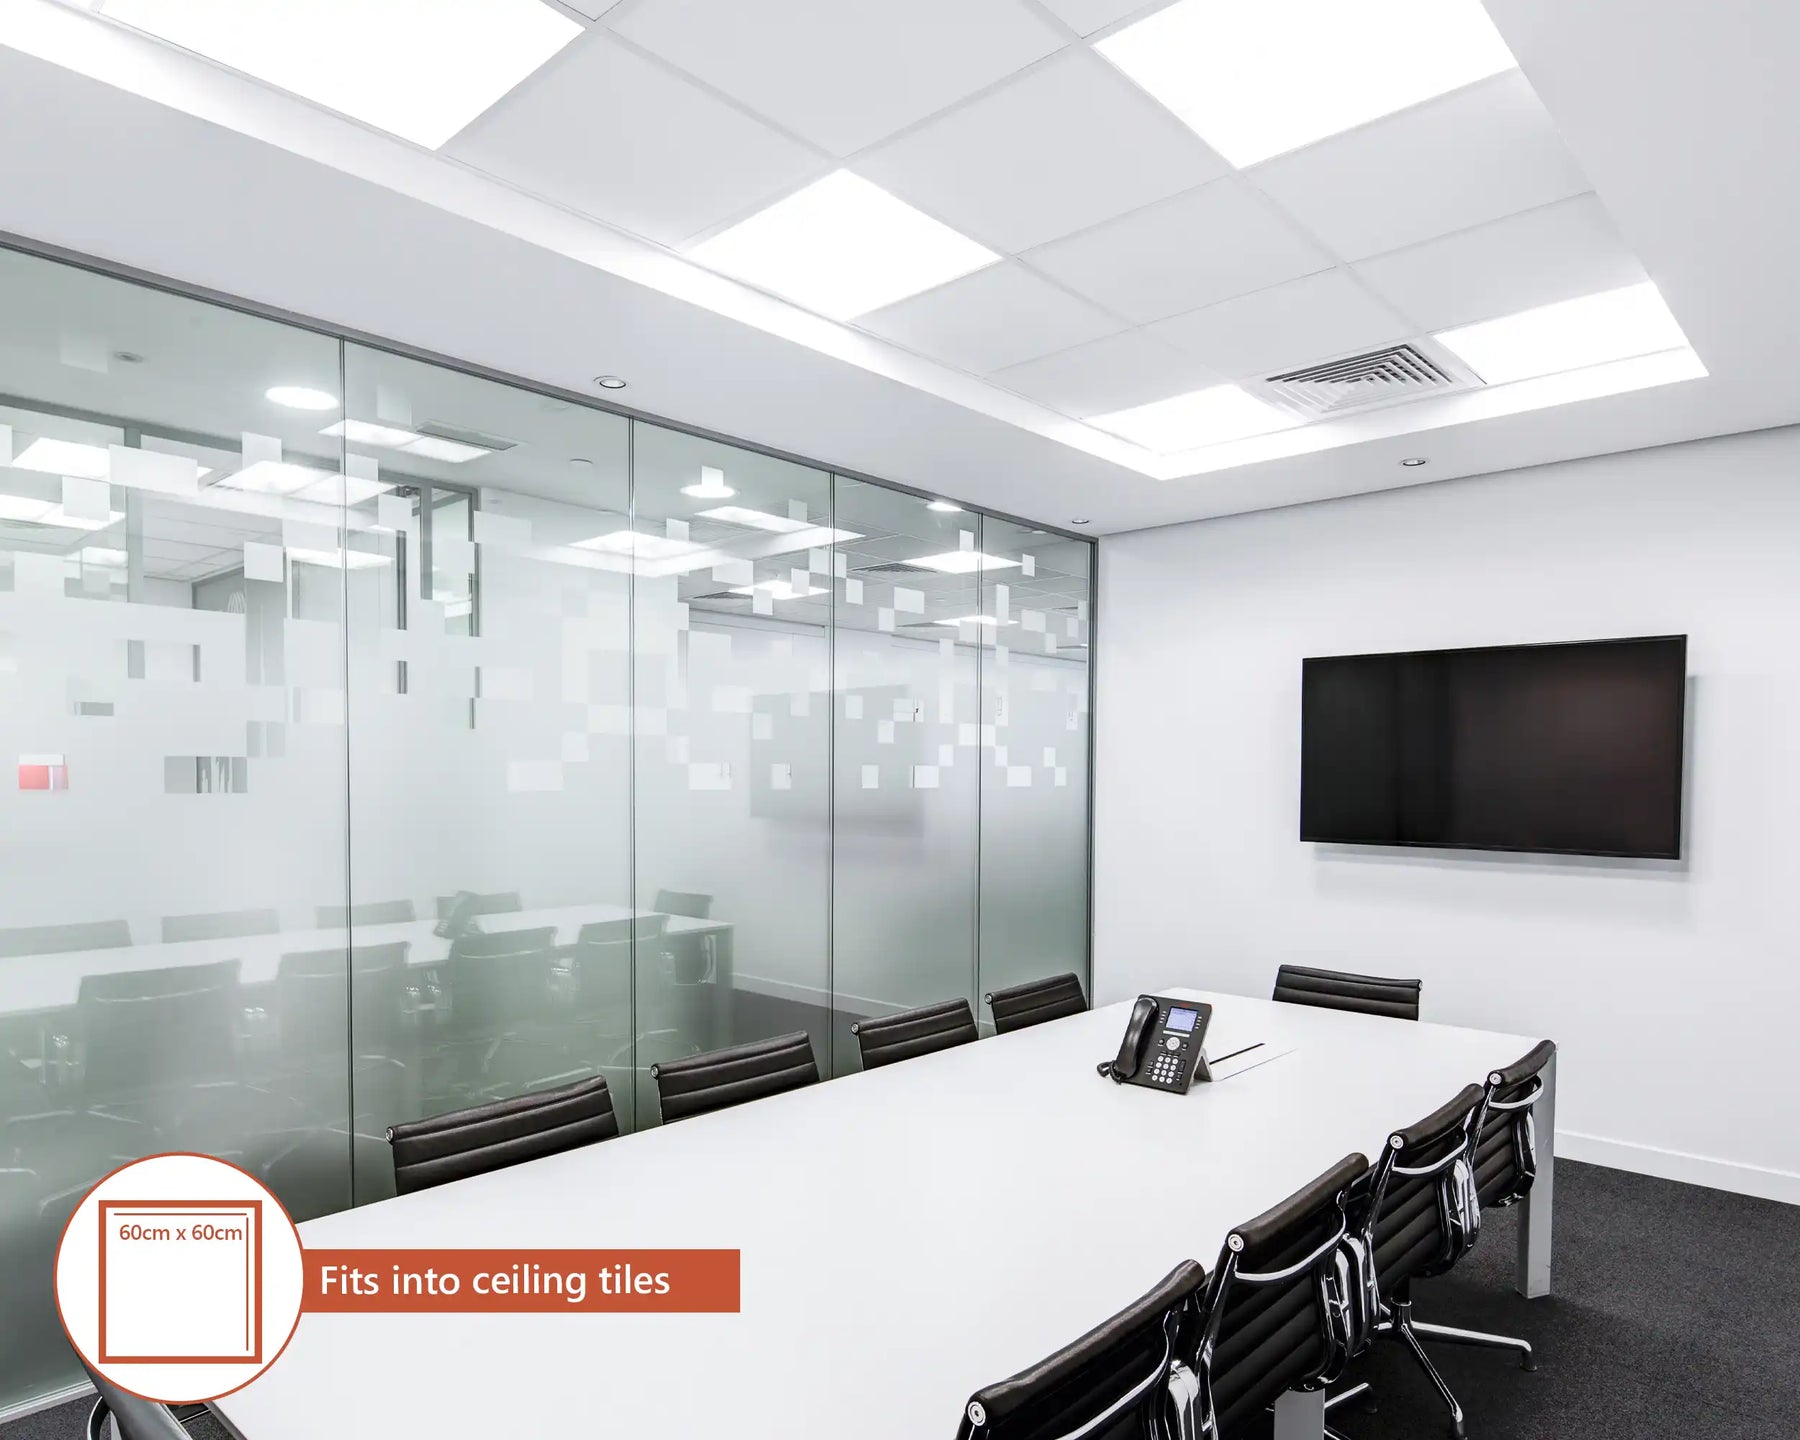 Kiasa 350w Panels replacing office ceiling panels - 60cm by 60cm